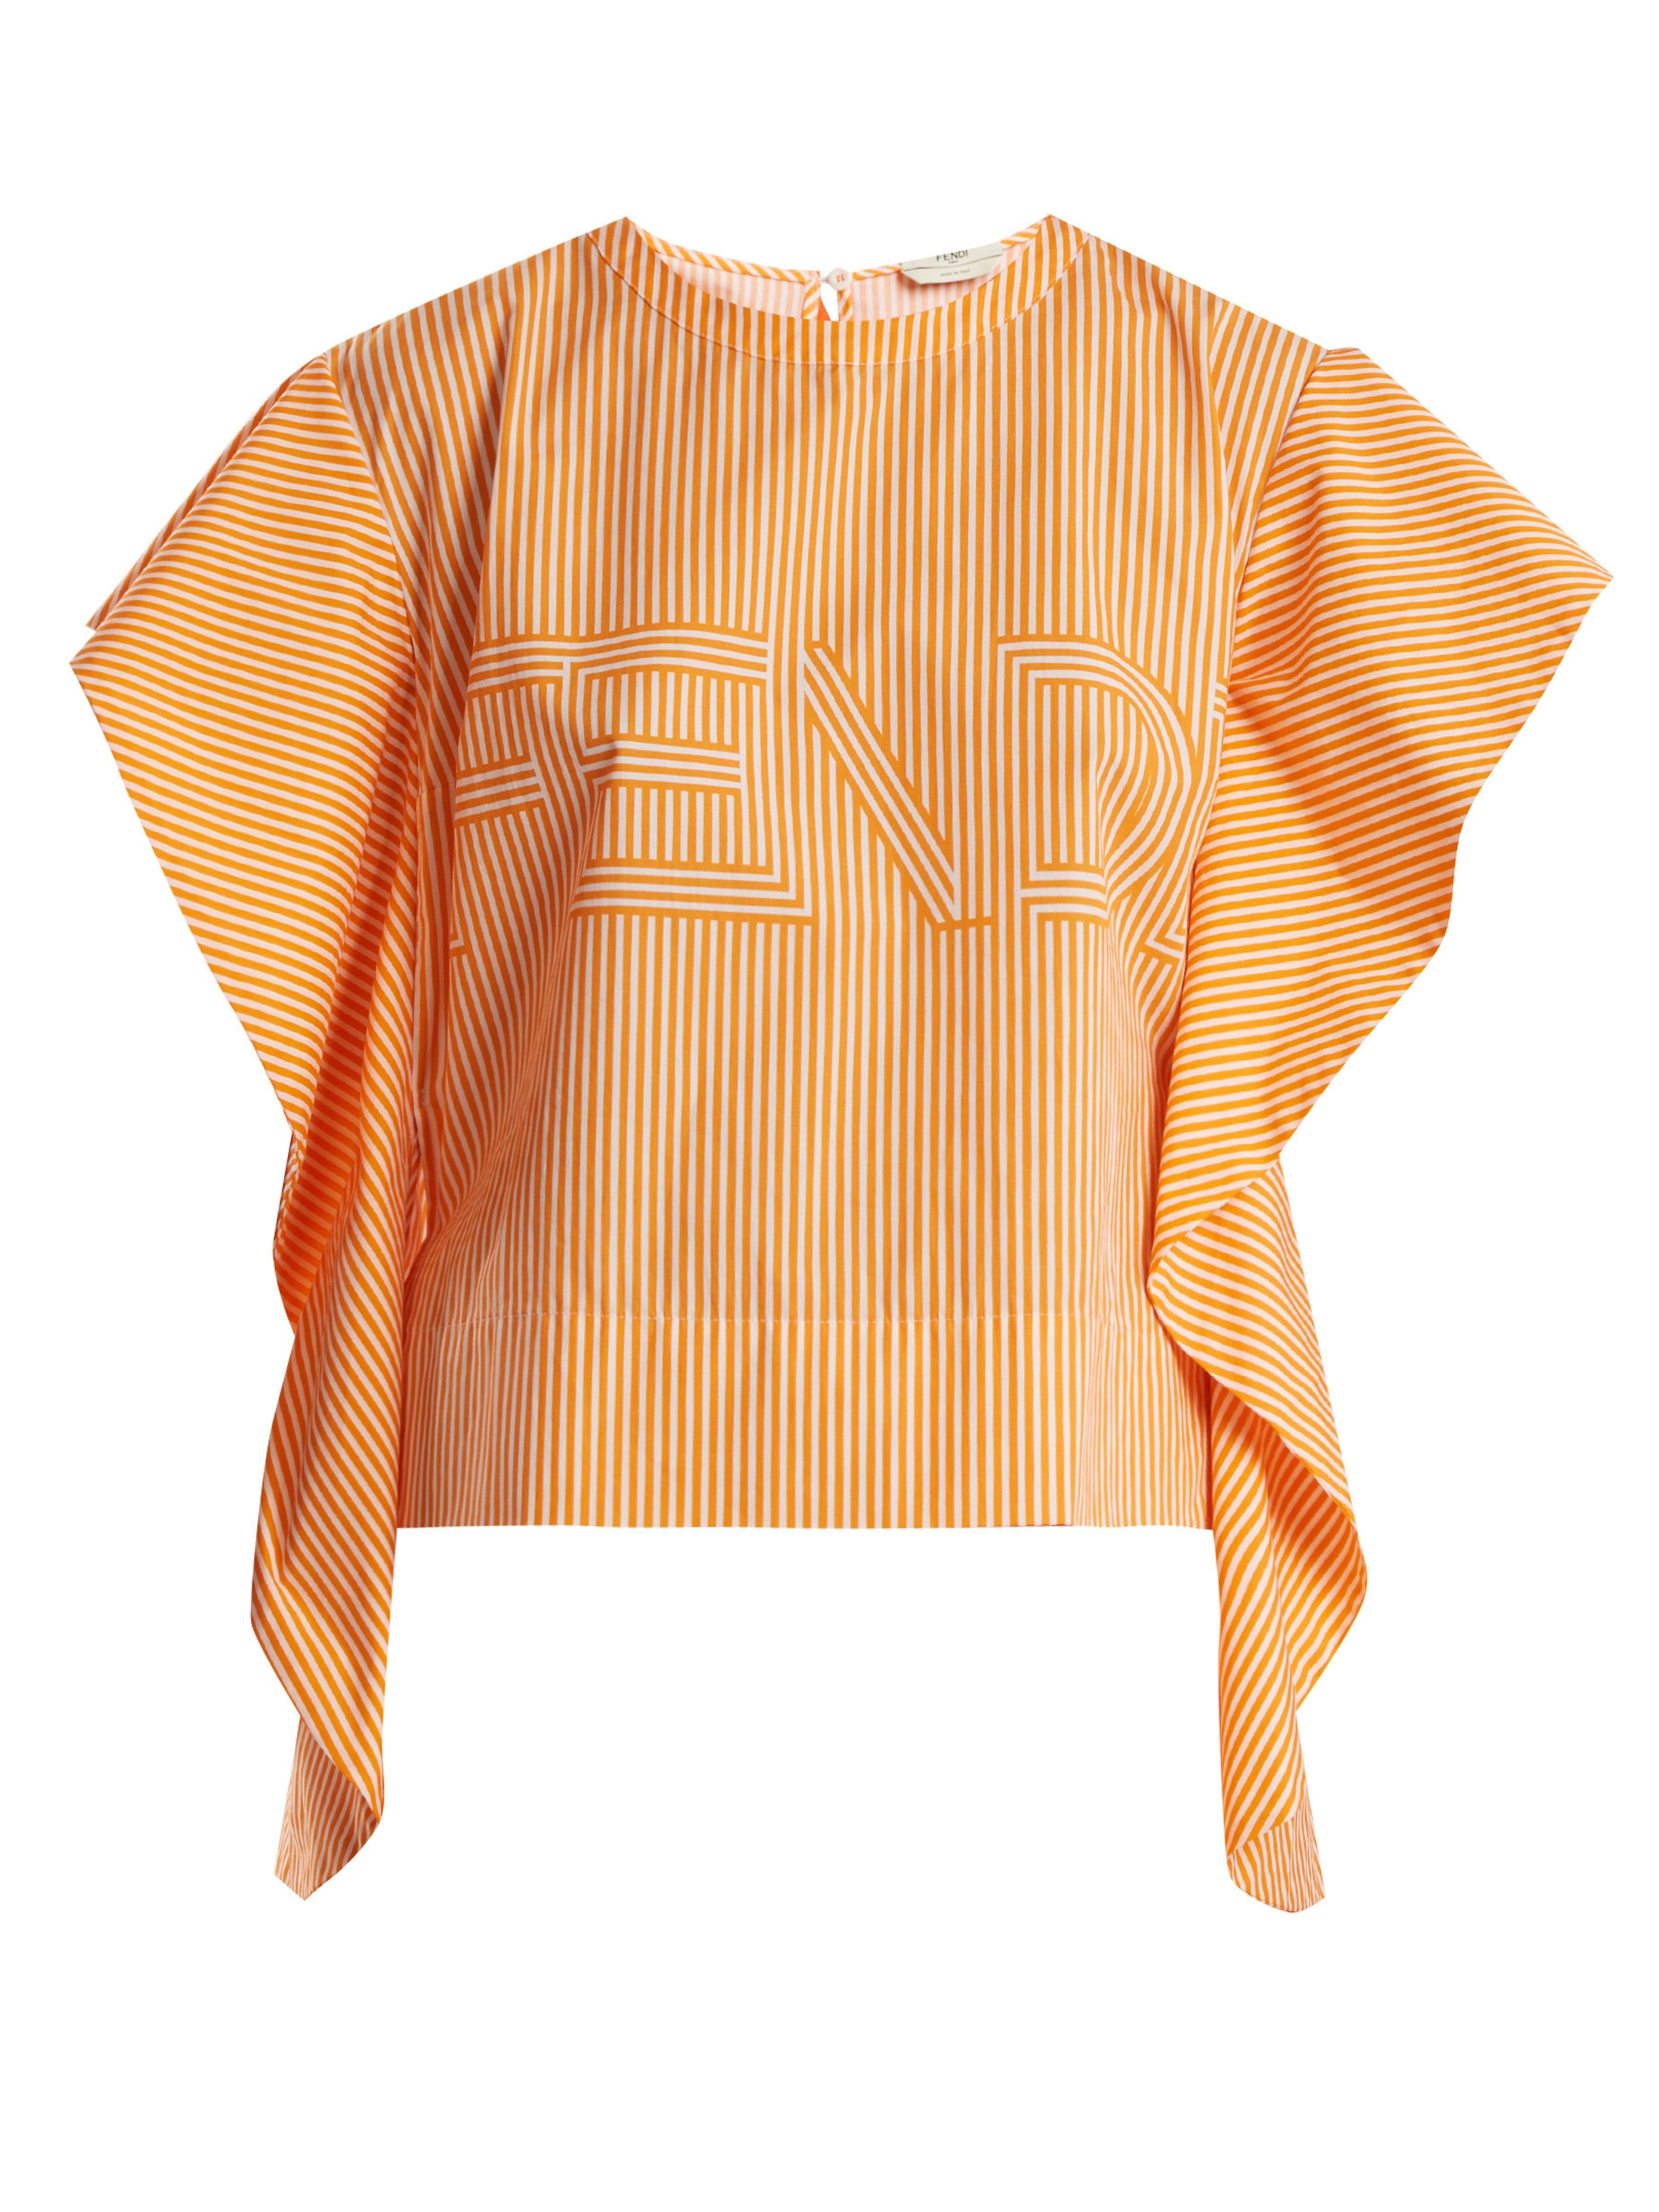 Orange Pattern Logo - Fendi Logo Print Striped Cotton Poplin Top in Orange